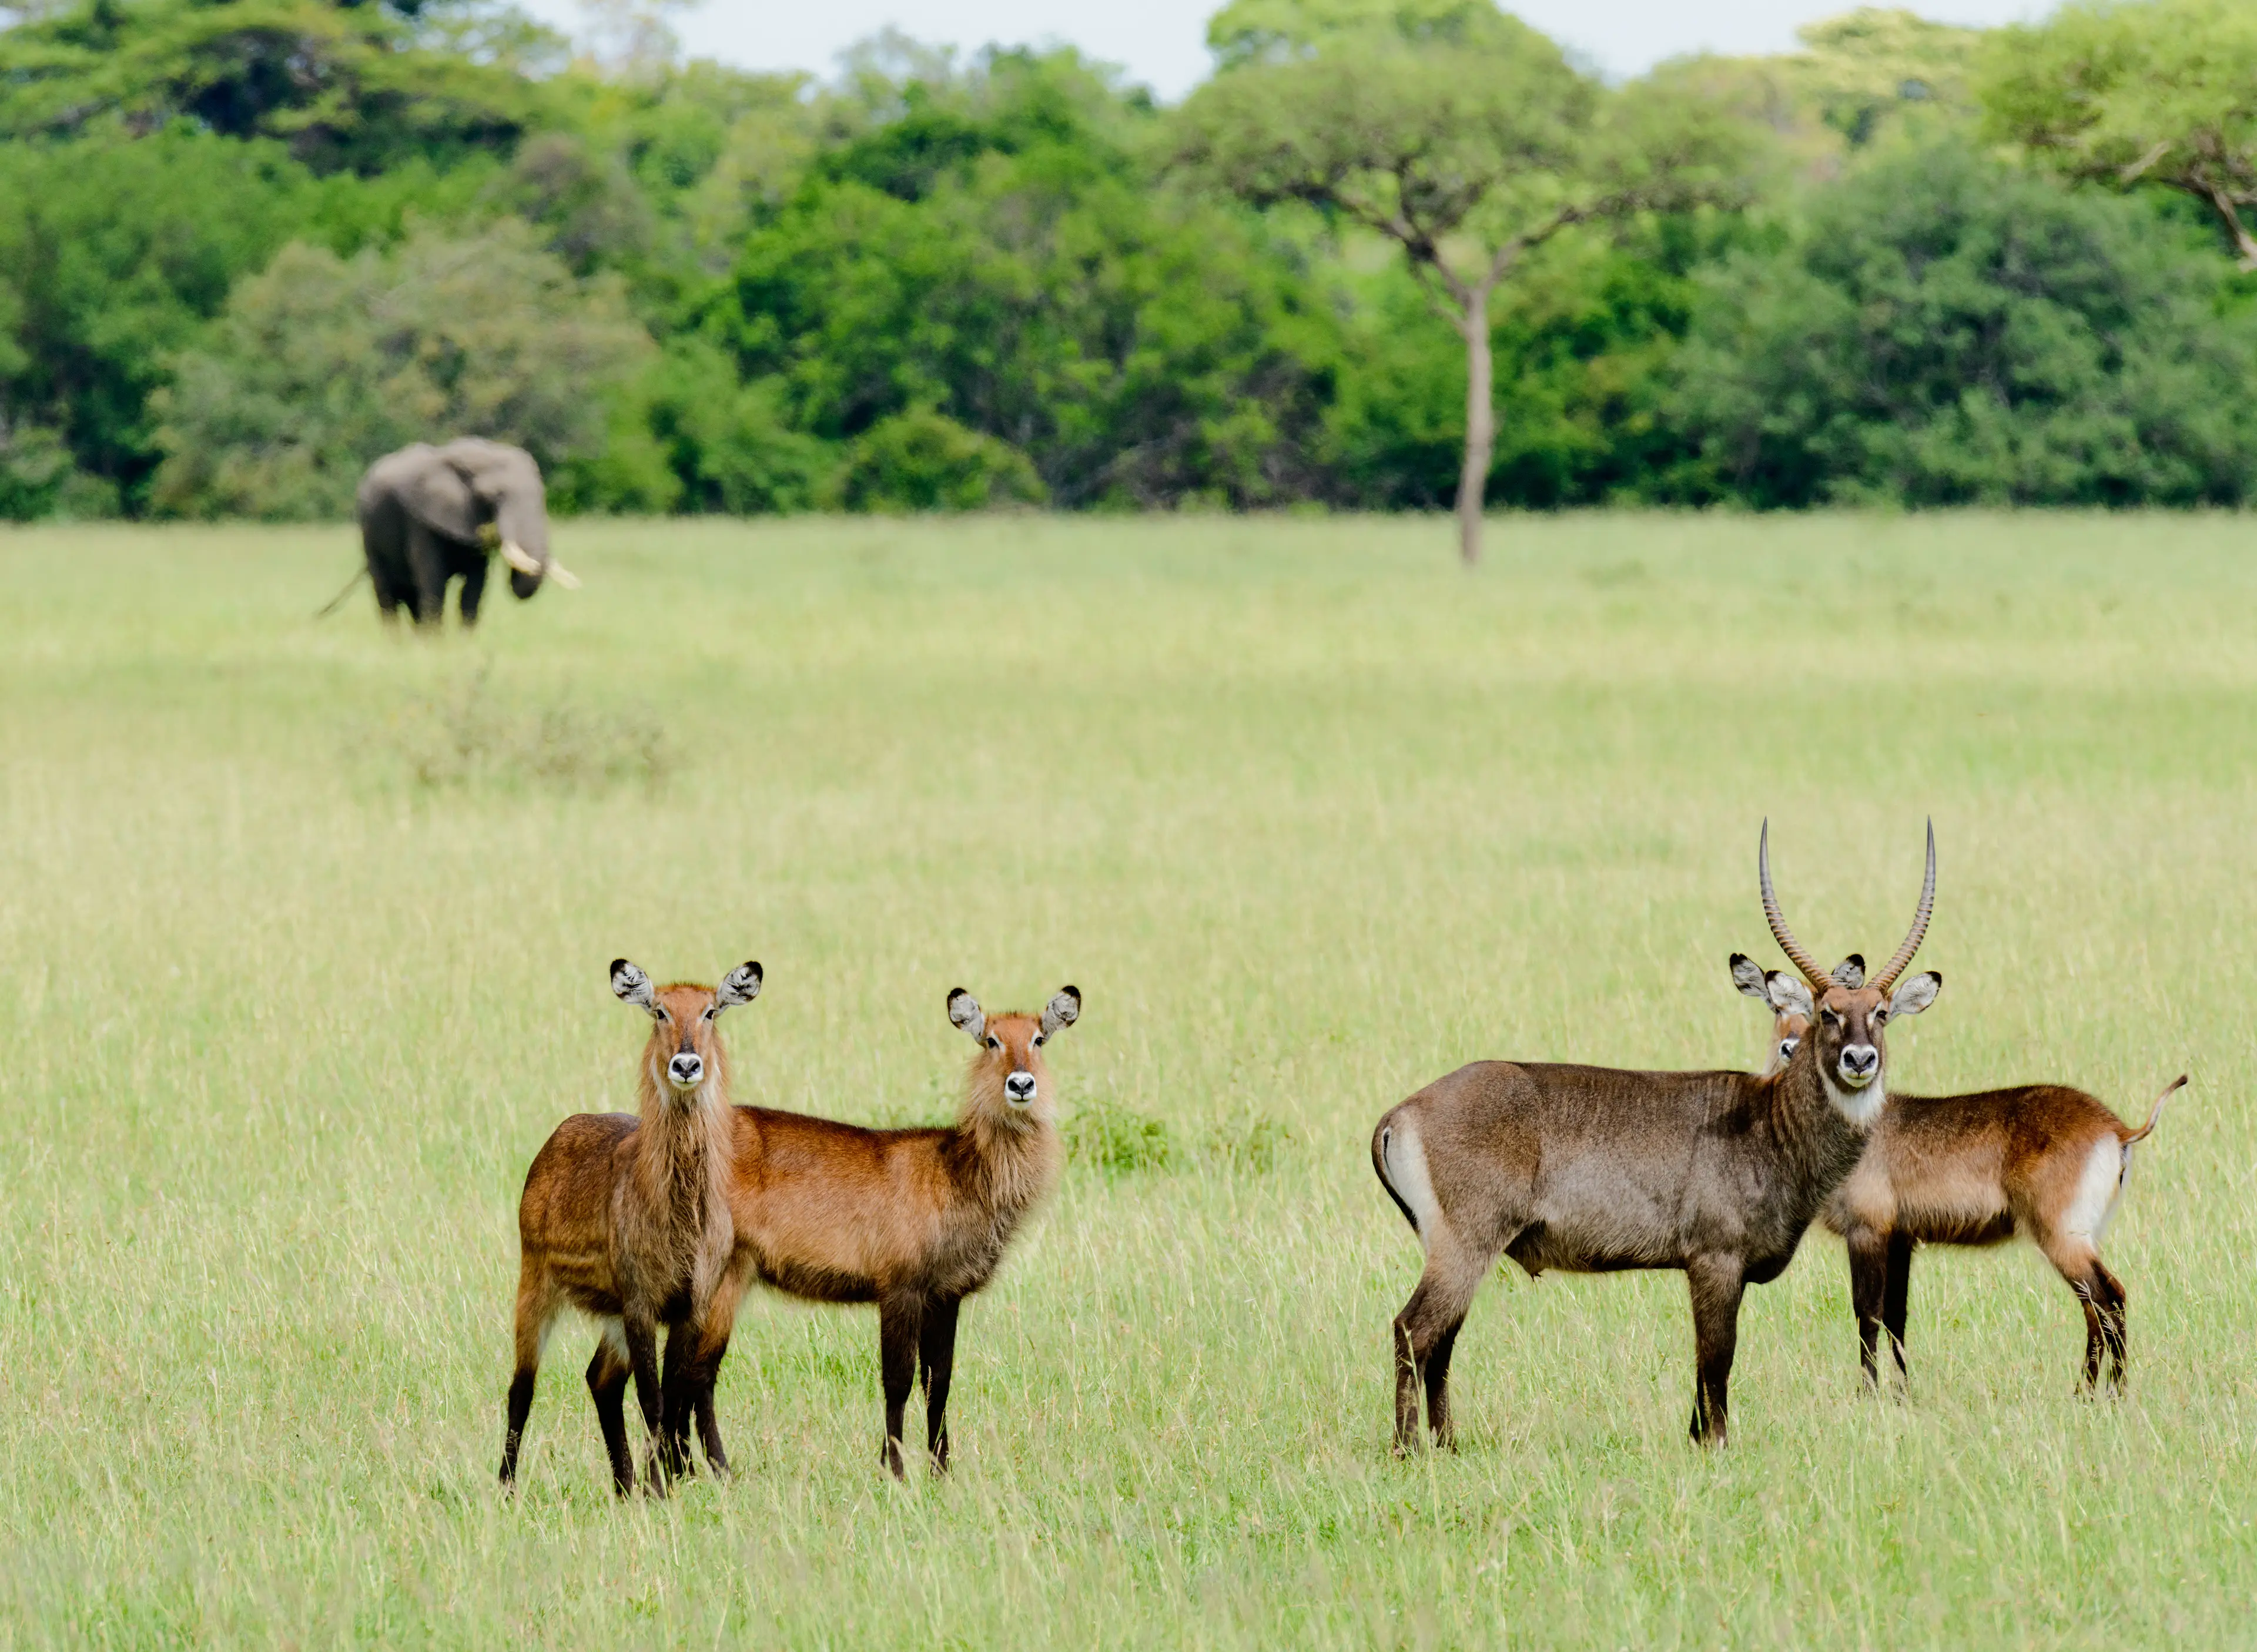 1-Day Adventure Guide to Serengeti National Park, Tanzania